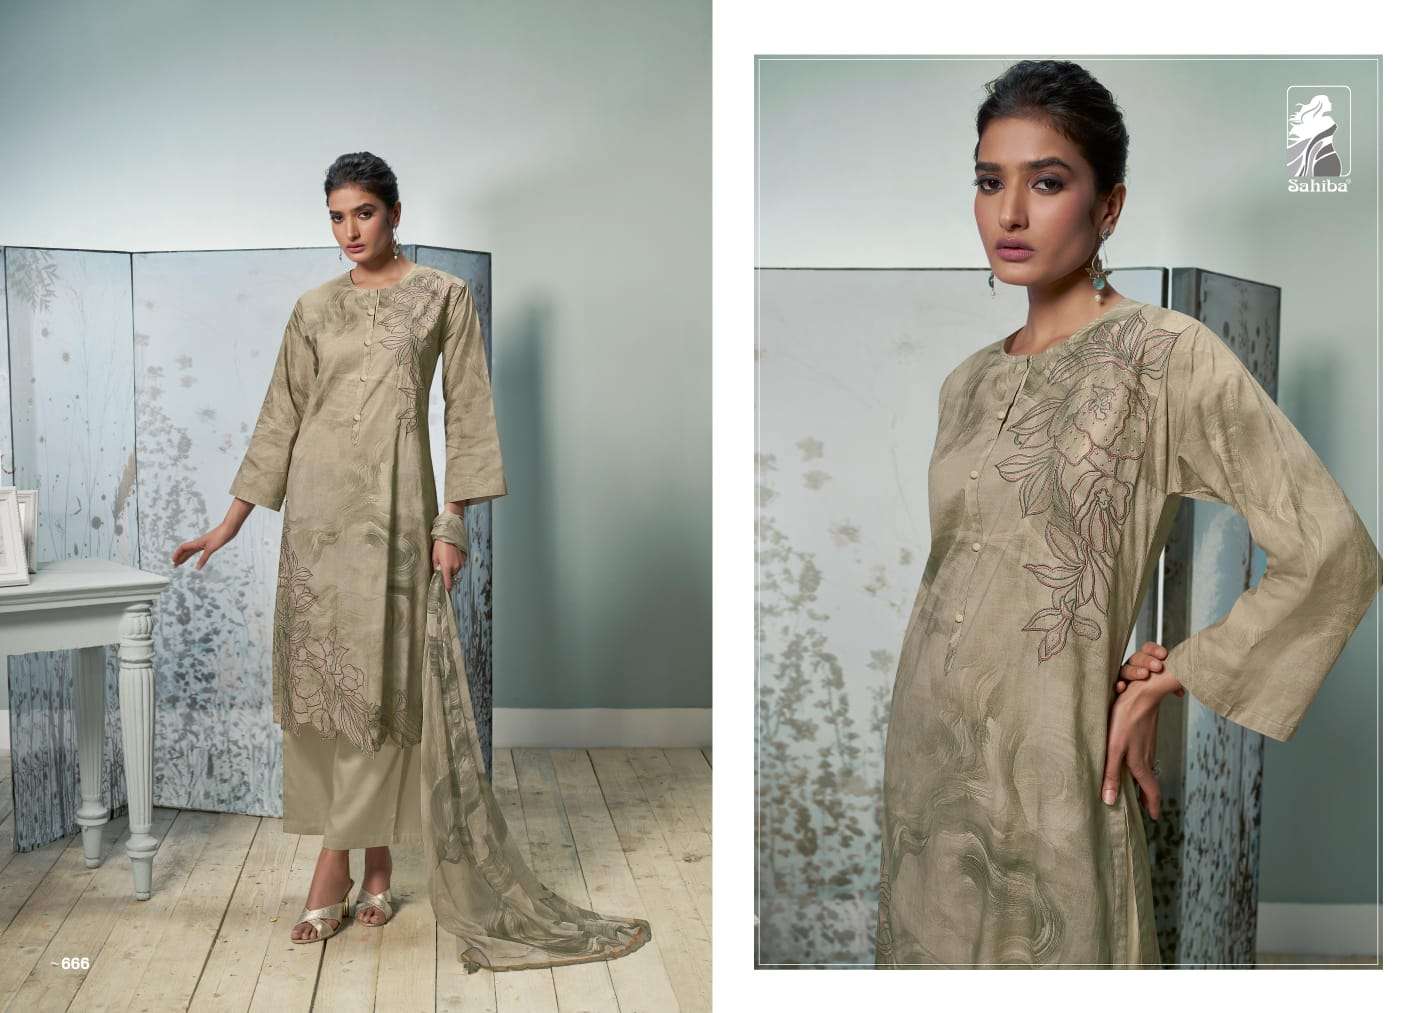 Sahiba NILGIRI Dress Material Wholesale catalog